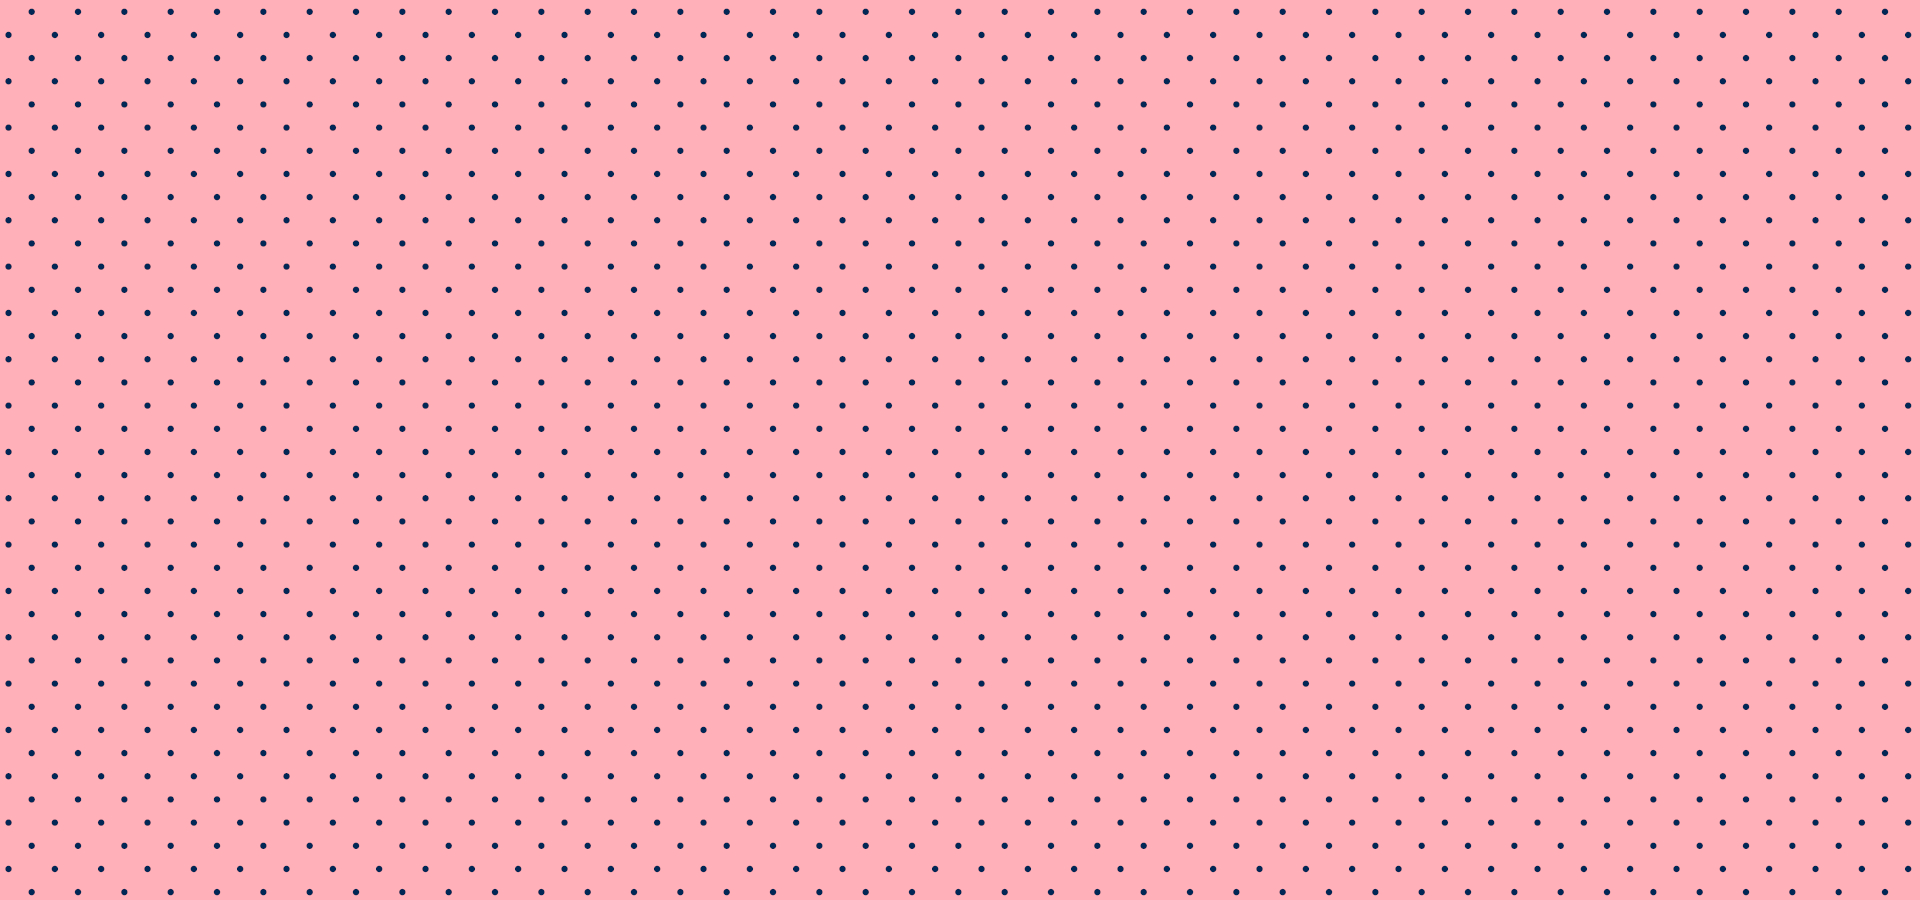 Navy polka dots on pink pattern